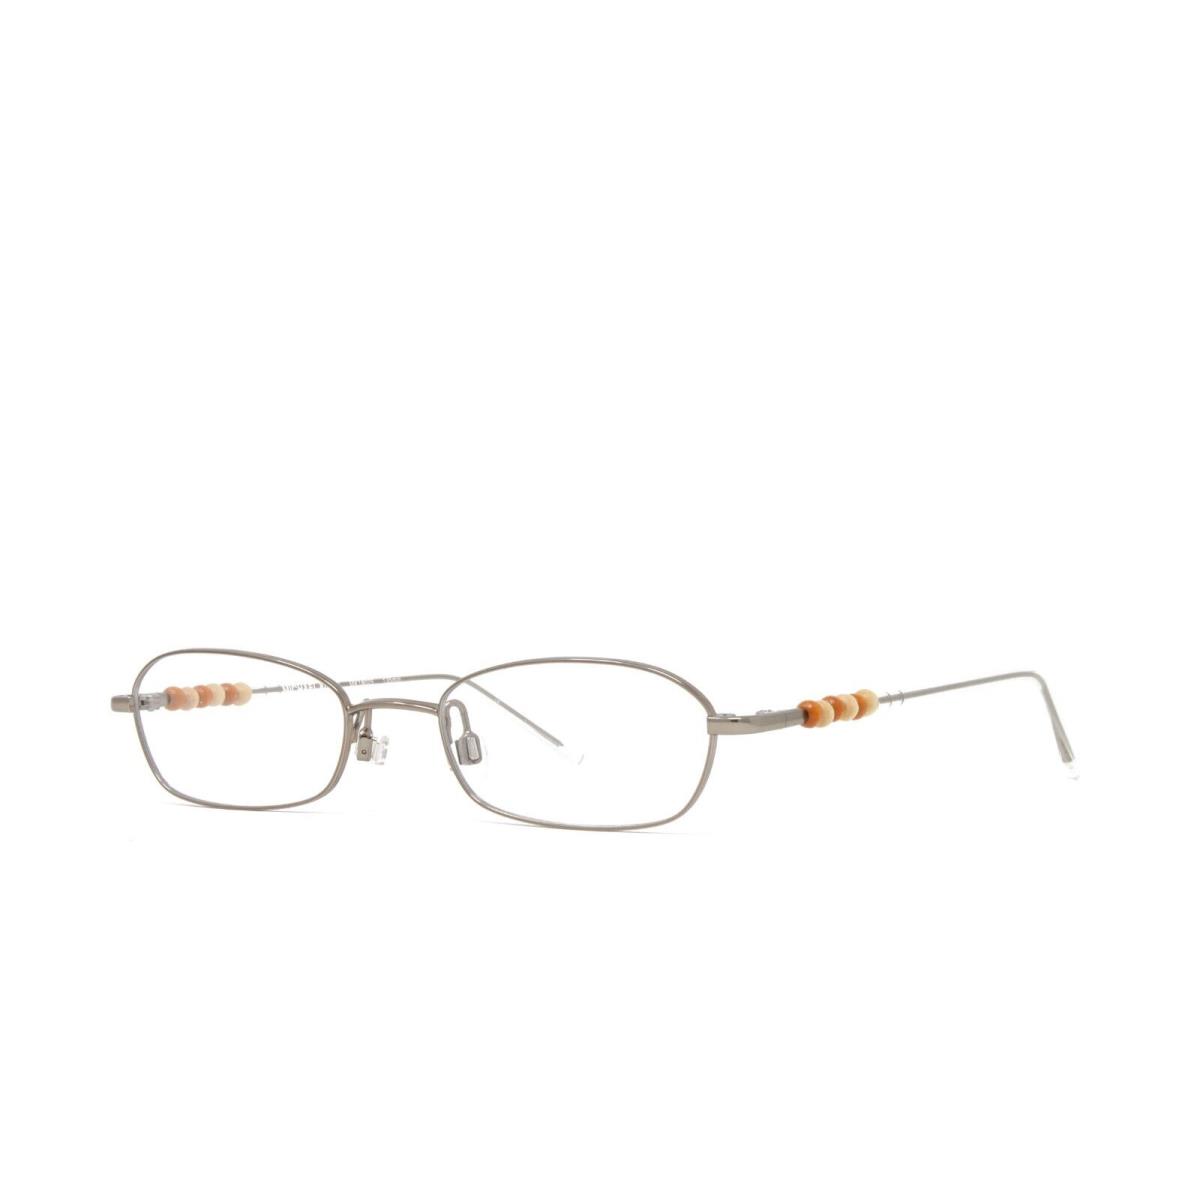 Michael Kors Eyeglasses MK18025 BR Brown /50mm Demo Lens